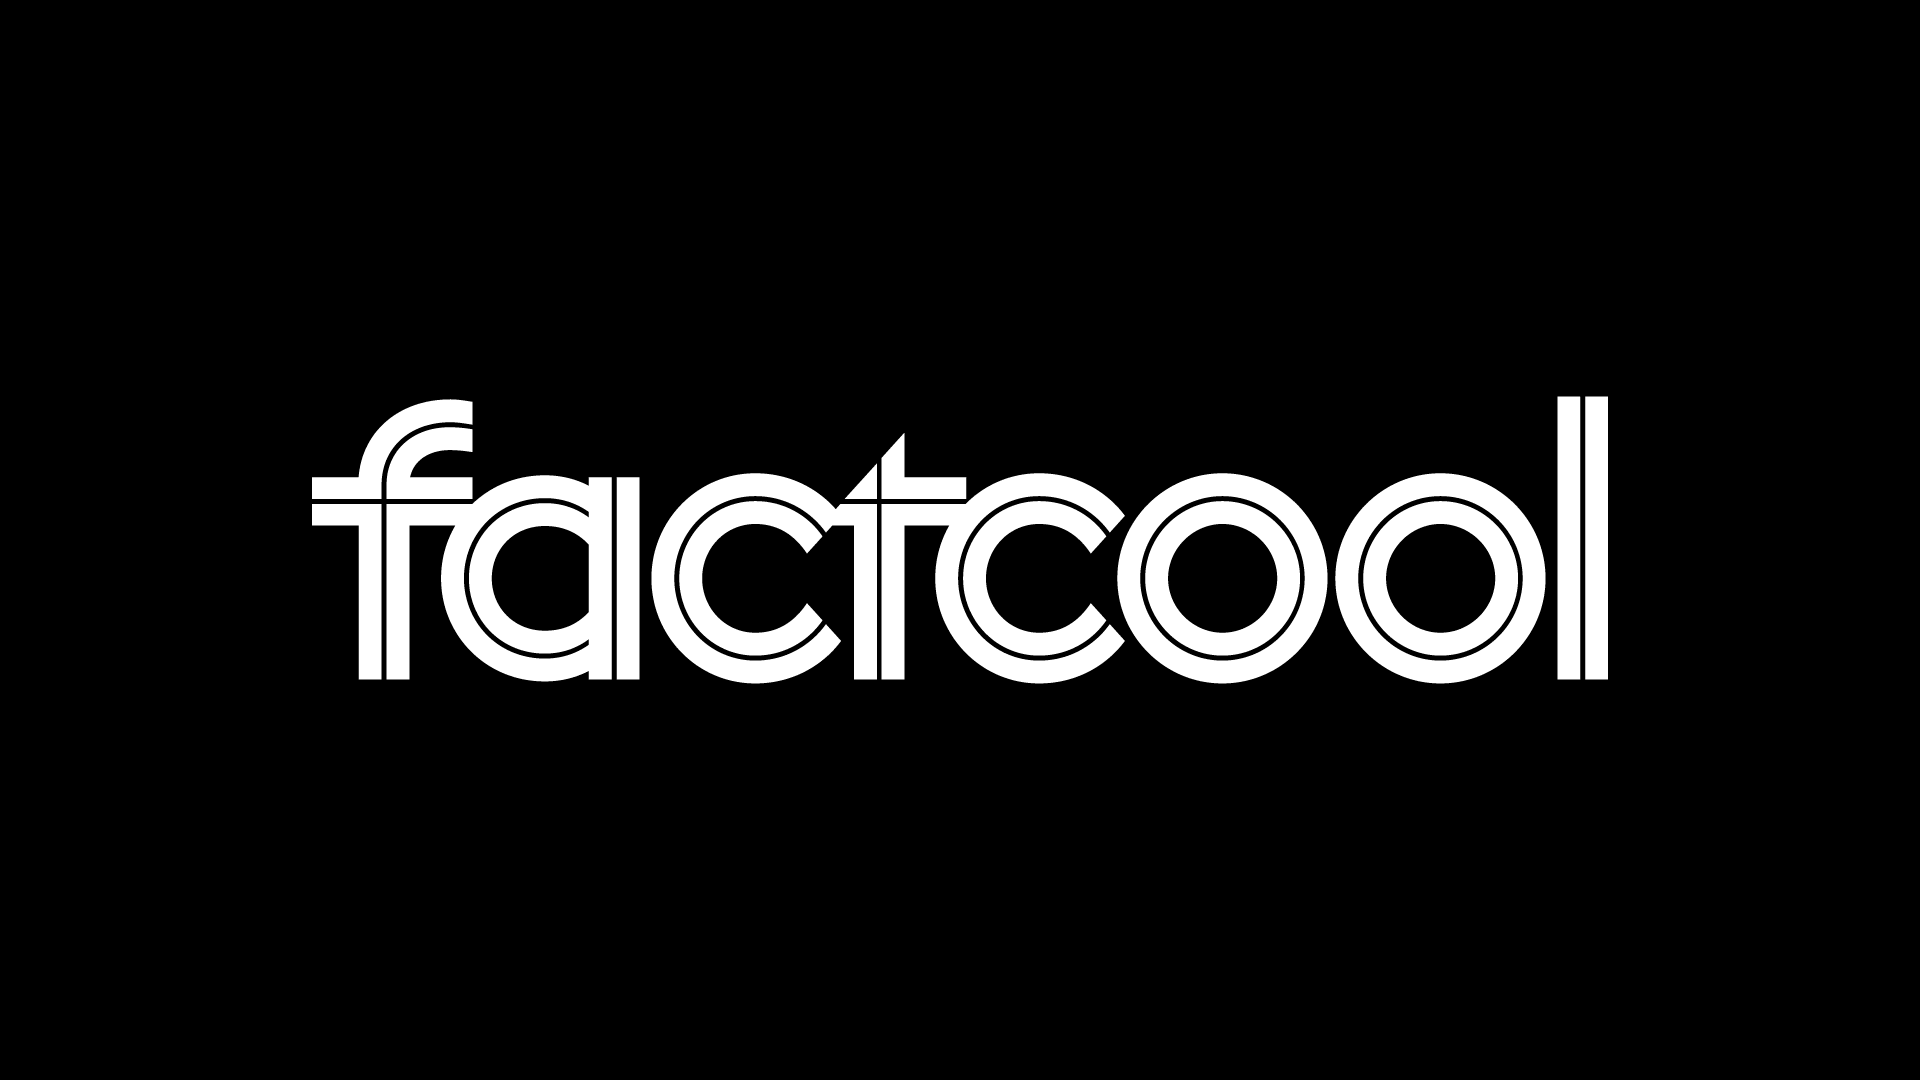 Branding: Factcool